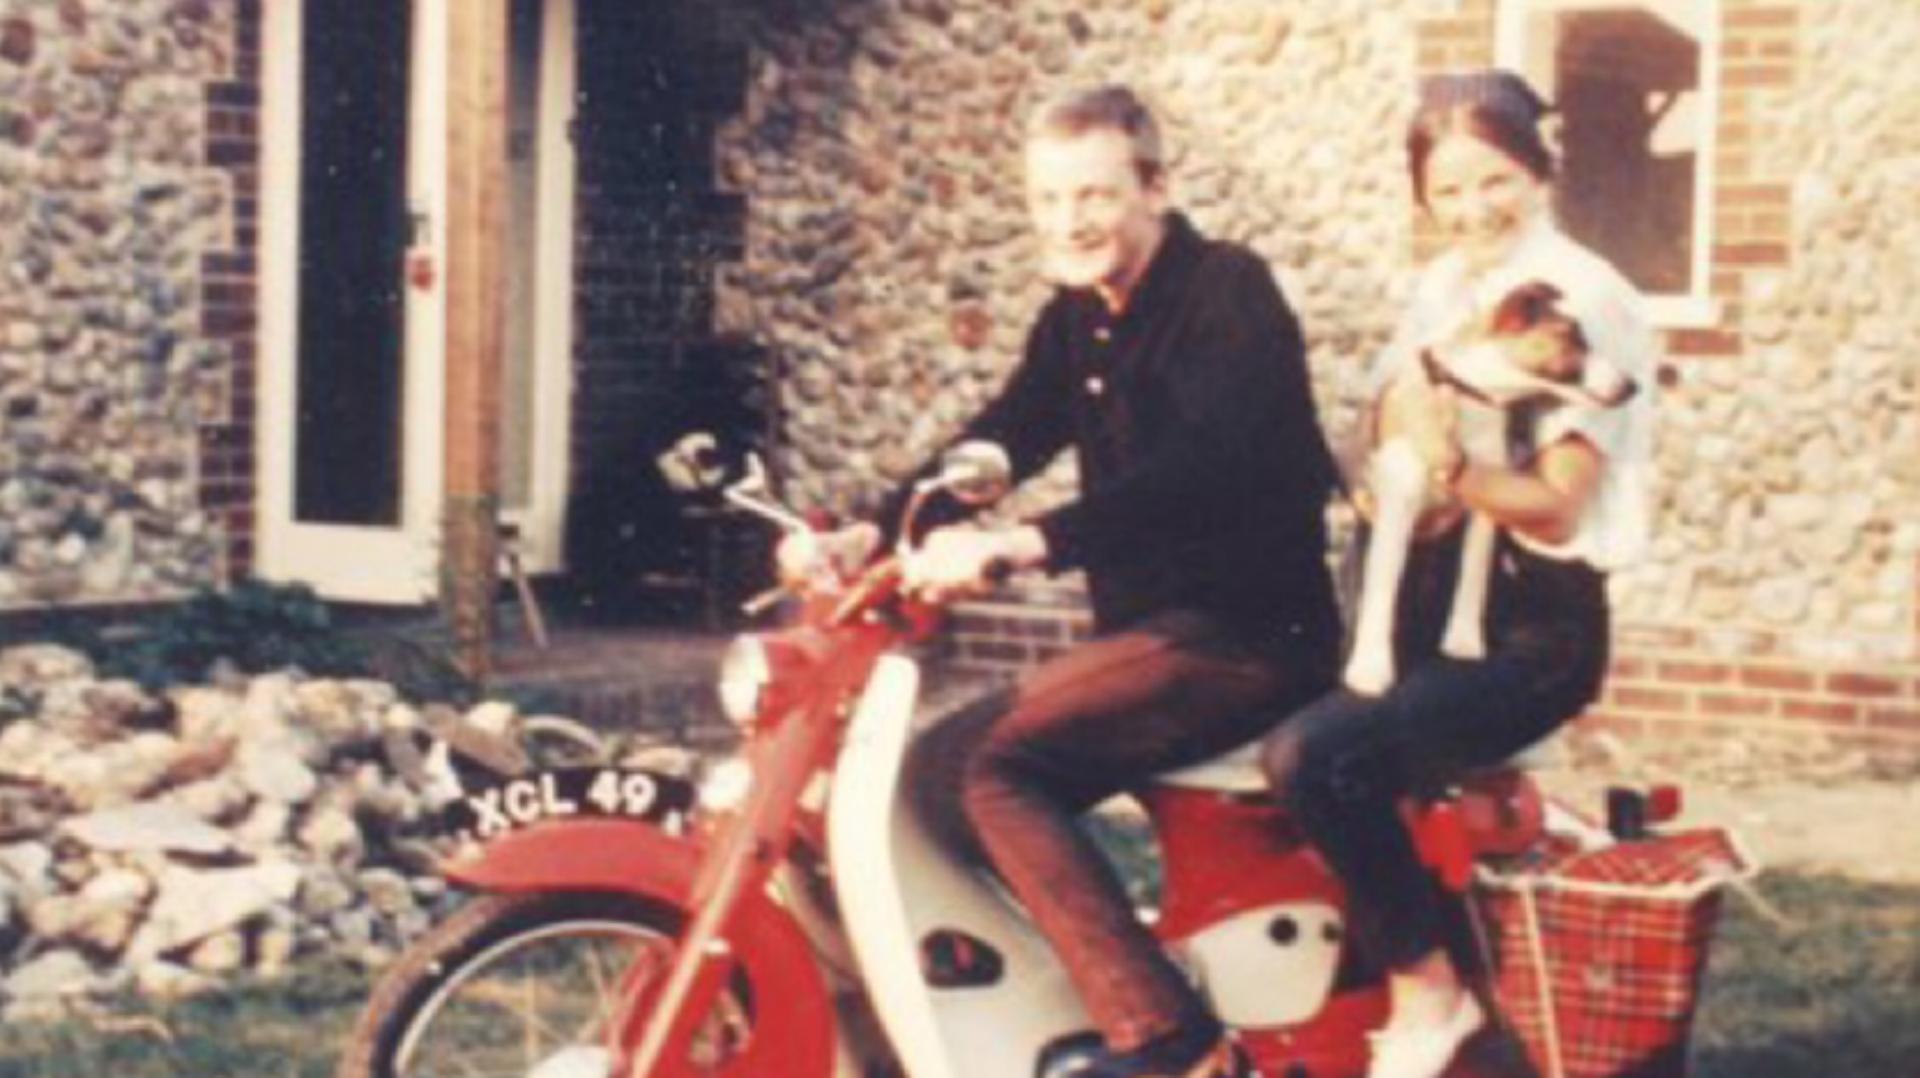 James Dyson and sister Shanie Dyson, sitting on a Honda 50